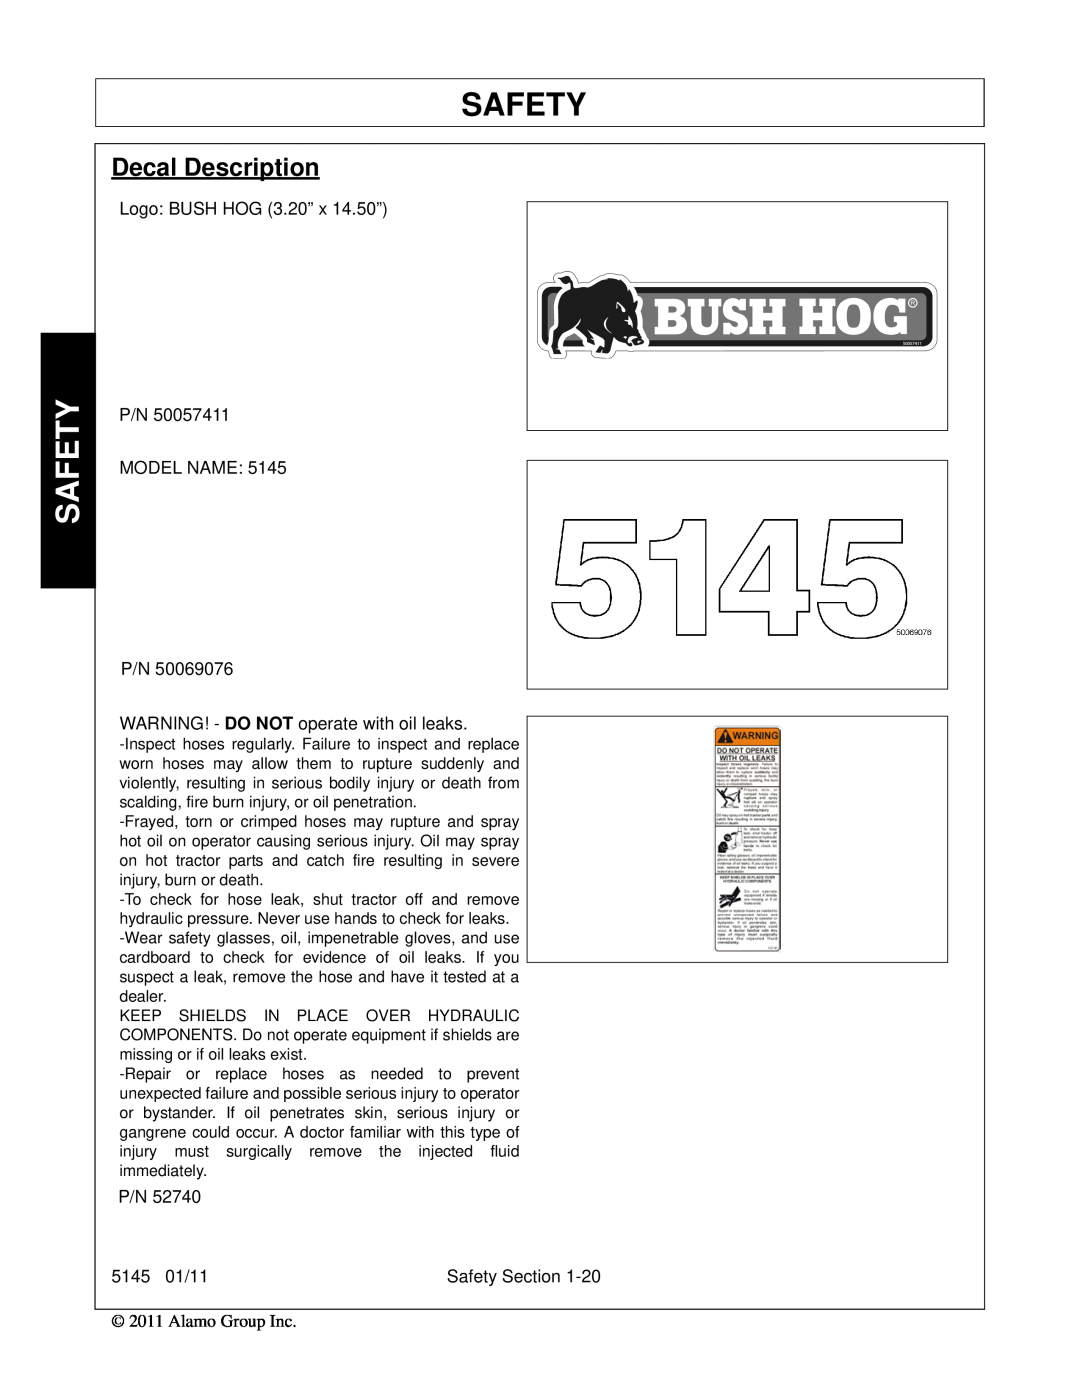 Bush Hog 5145 manual Safety, Decal Description 